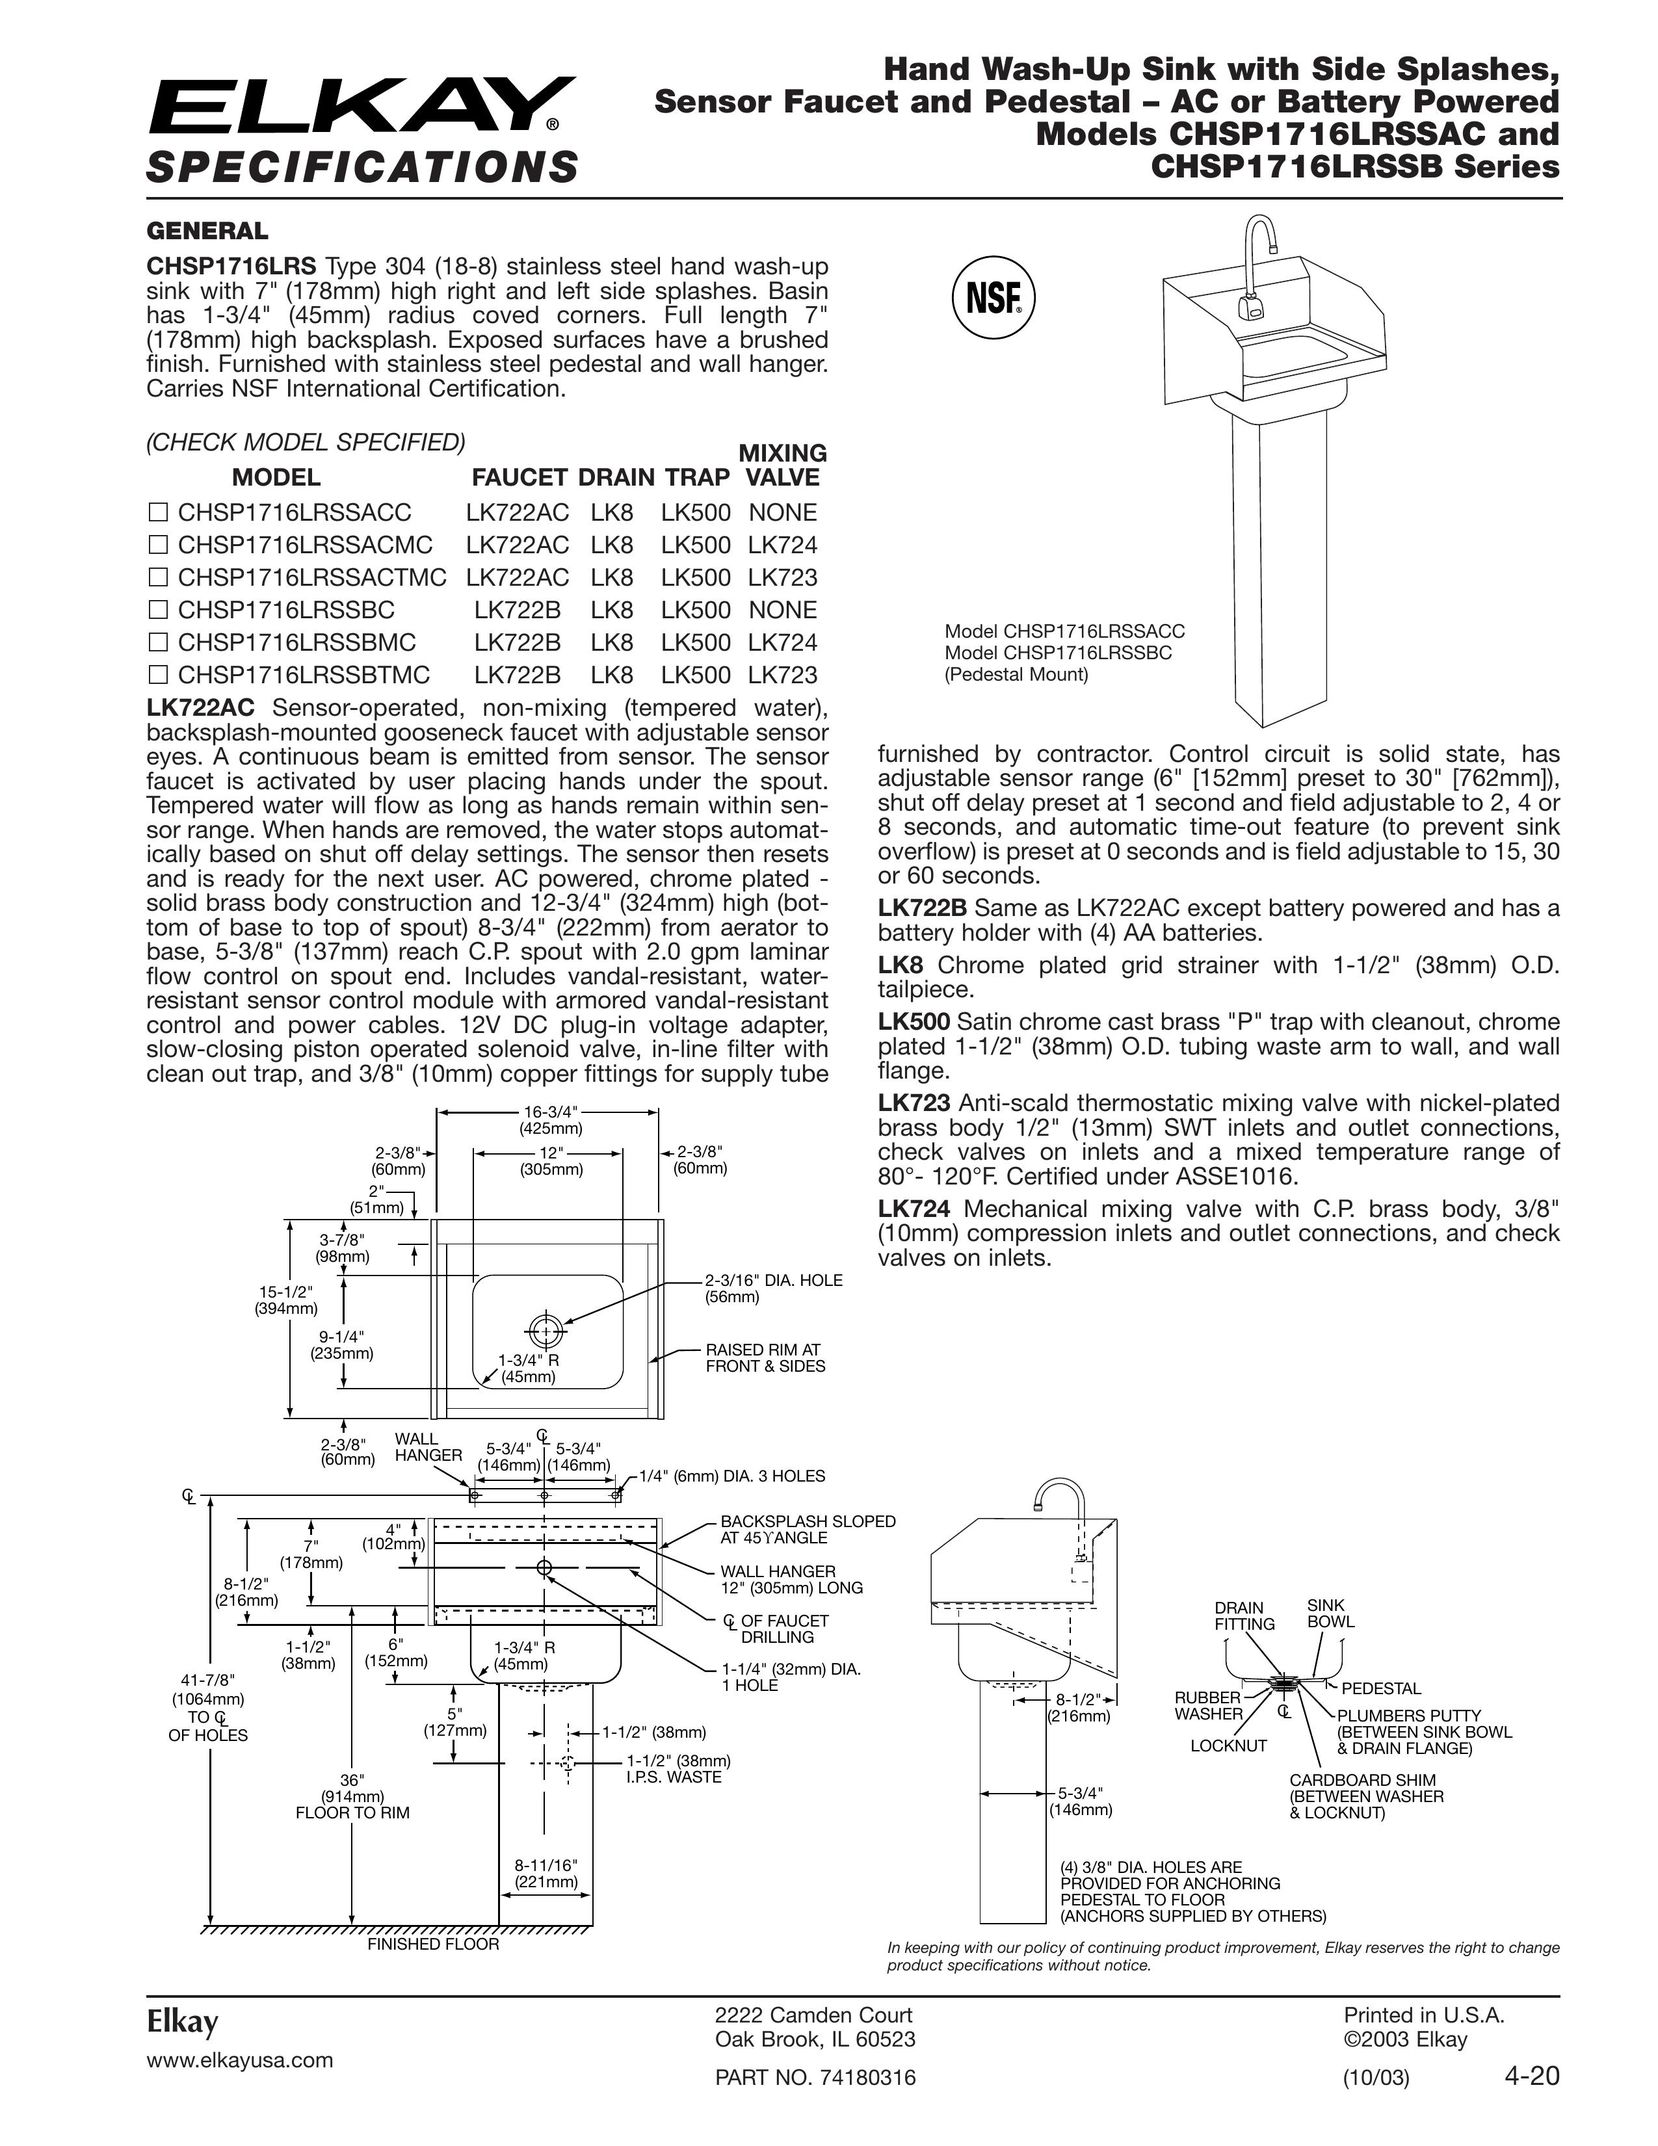 Elkay CHSP1716LRSSACMC Indoor Furnishings User Manual